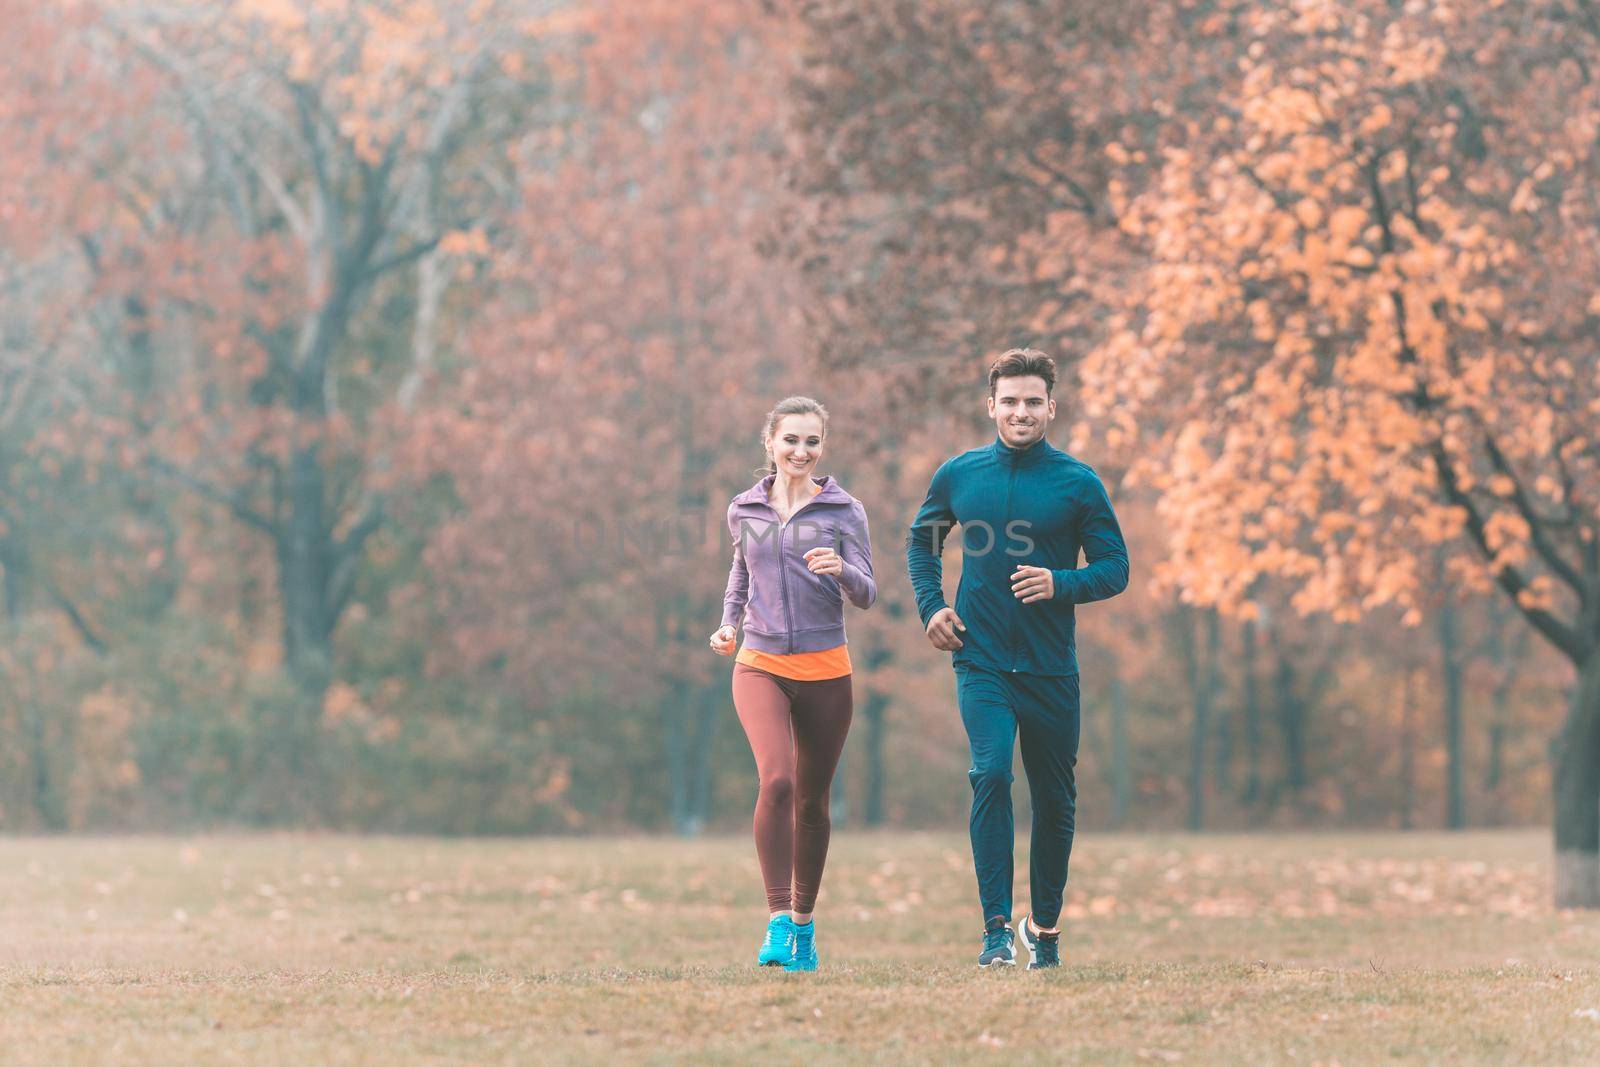 Couple in wonderful fall landscape running for better fitness by Kzenon